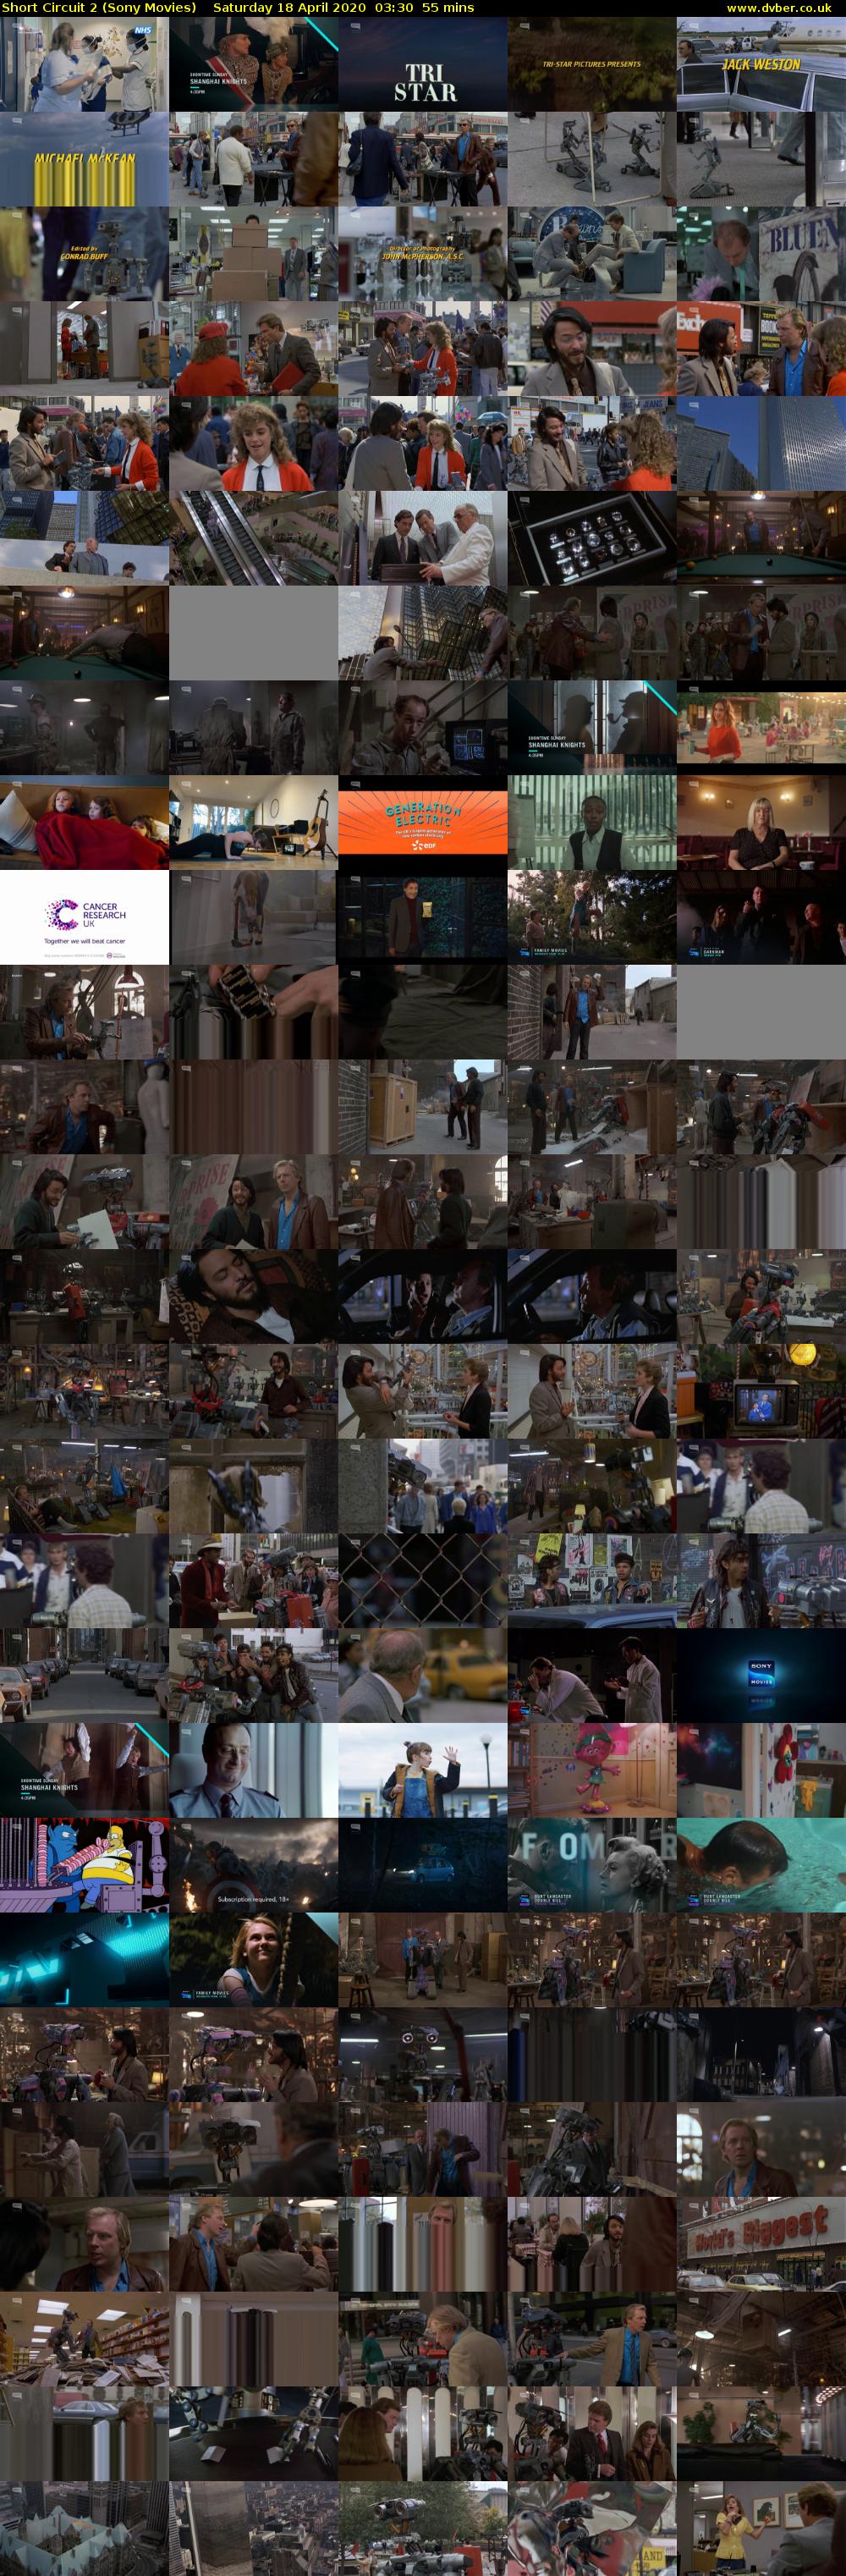 Short Circuit 2 (Sony Movies) Saturday 18 April 2020 03:30 - 04:25